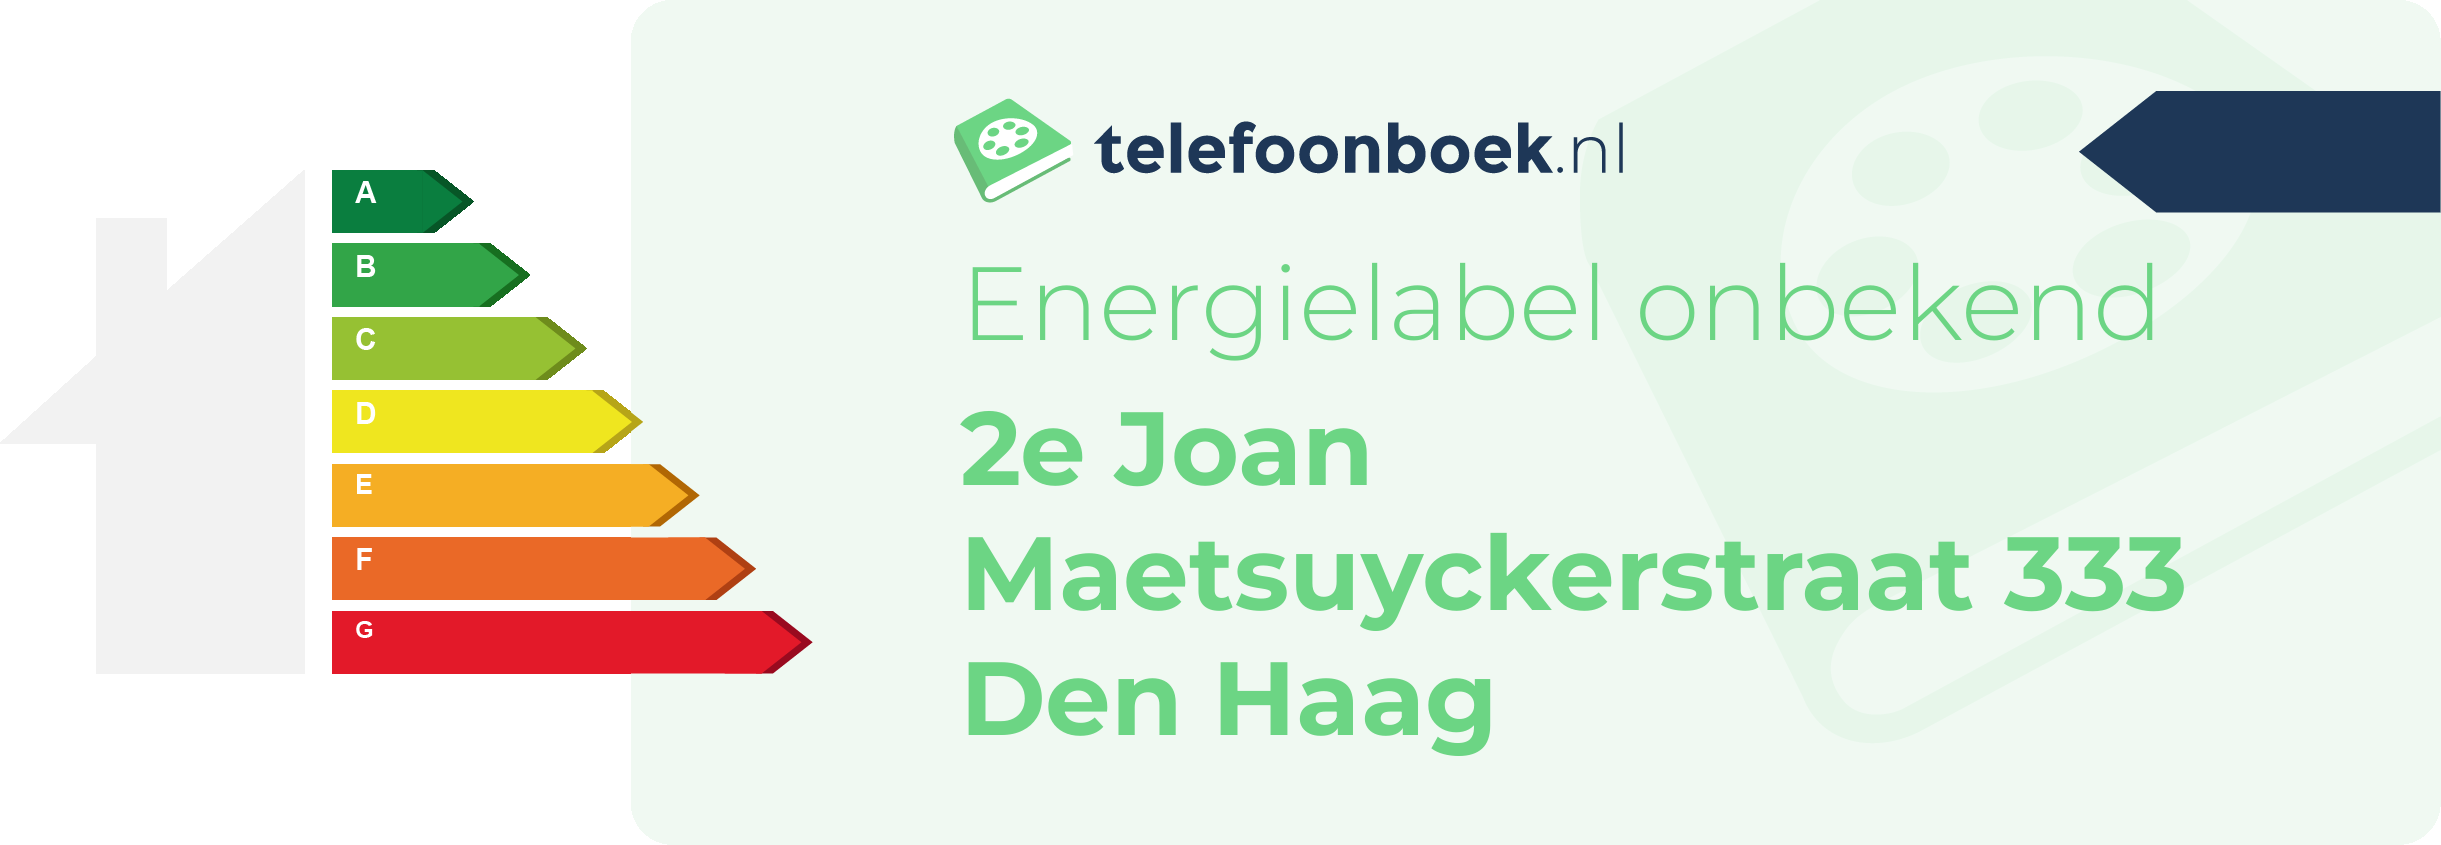 Energielabel 2e Joan Maetsuyckerstraat 333 Den Haag